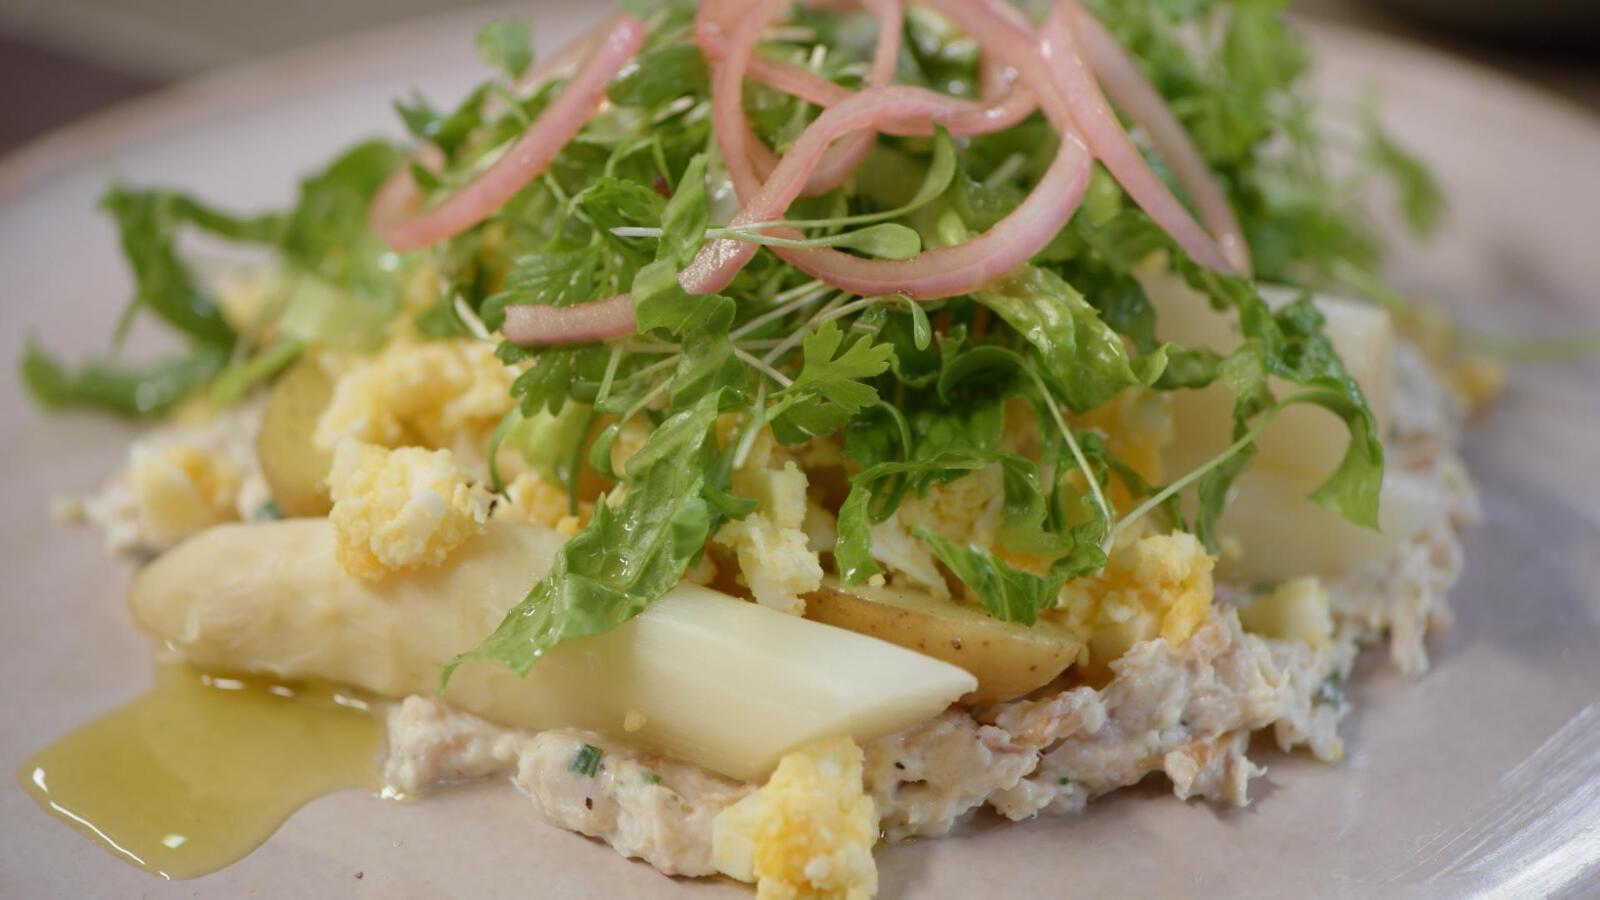 Salade van asperges met rillettes van gerookte forel en gekonfijte aardappel